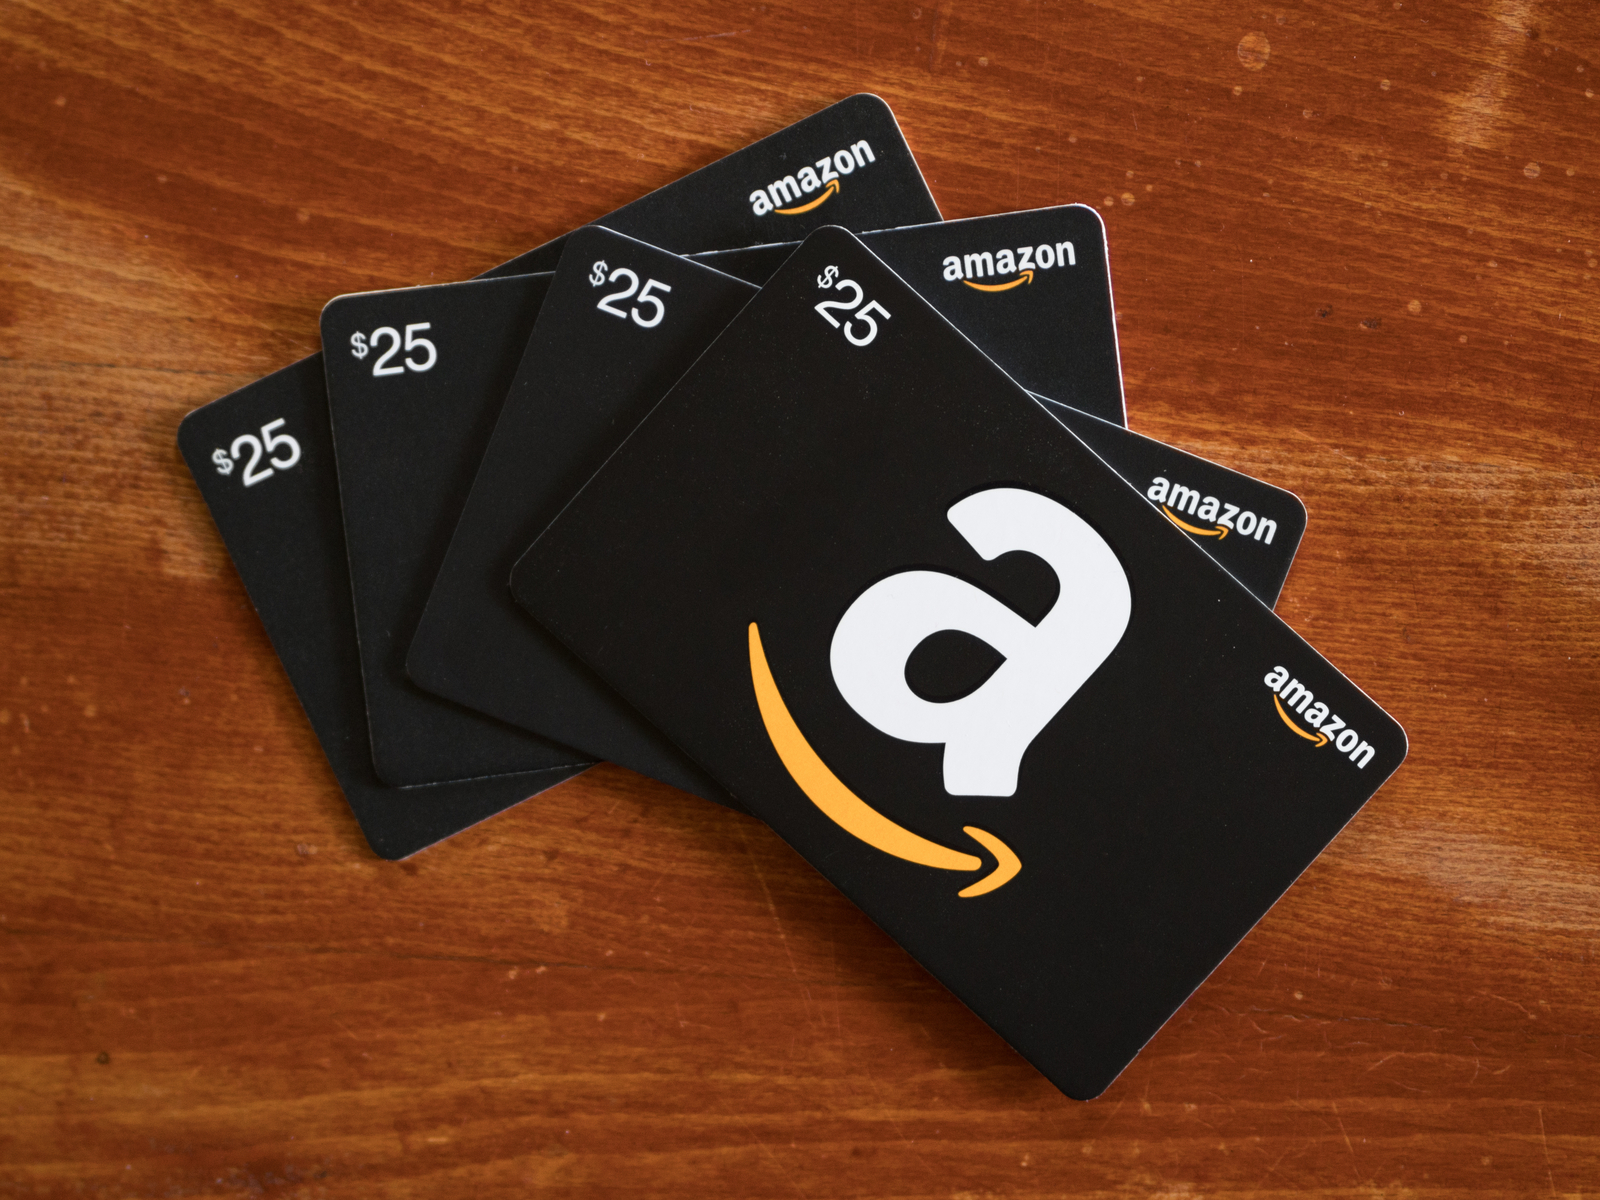 Amazon gift card with bitcoin visa card to bitcoin